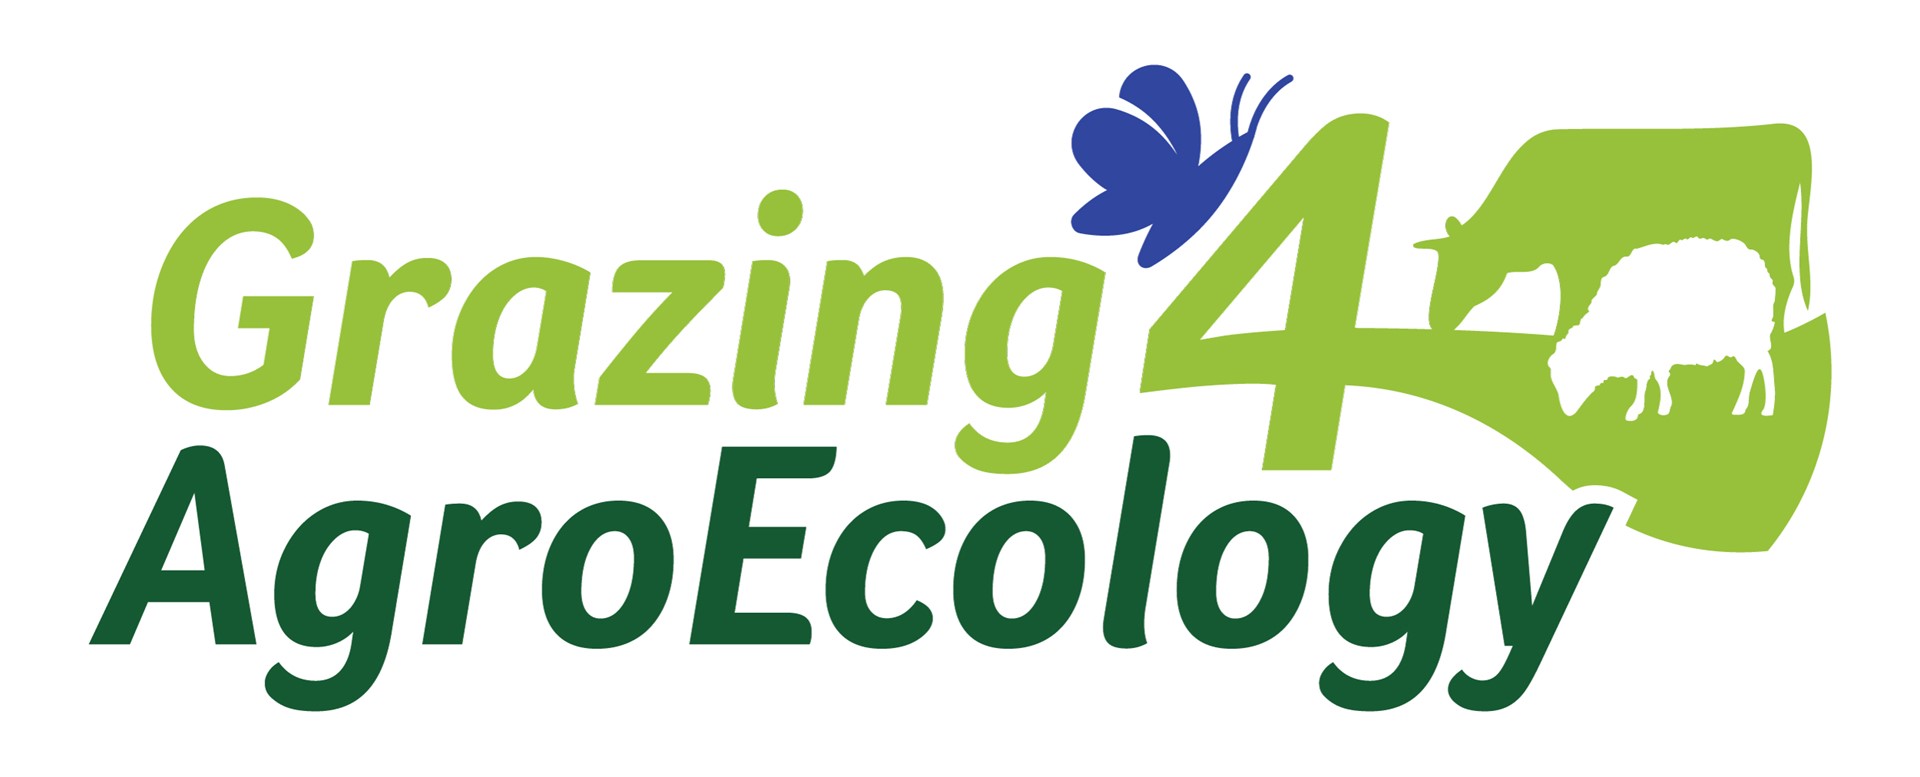 Logo_Grazing4Agroecology_4c.jpg